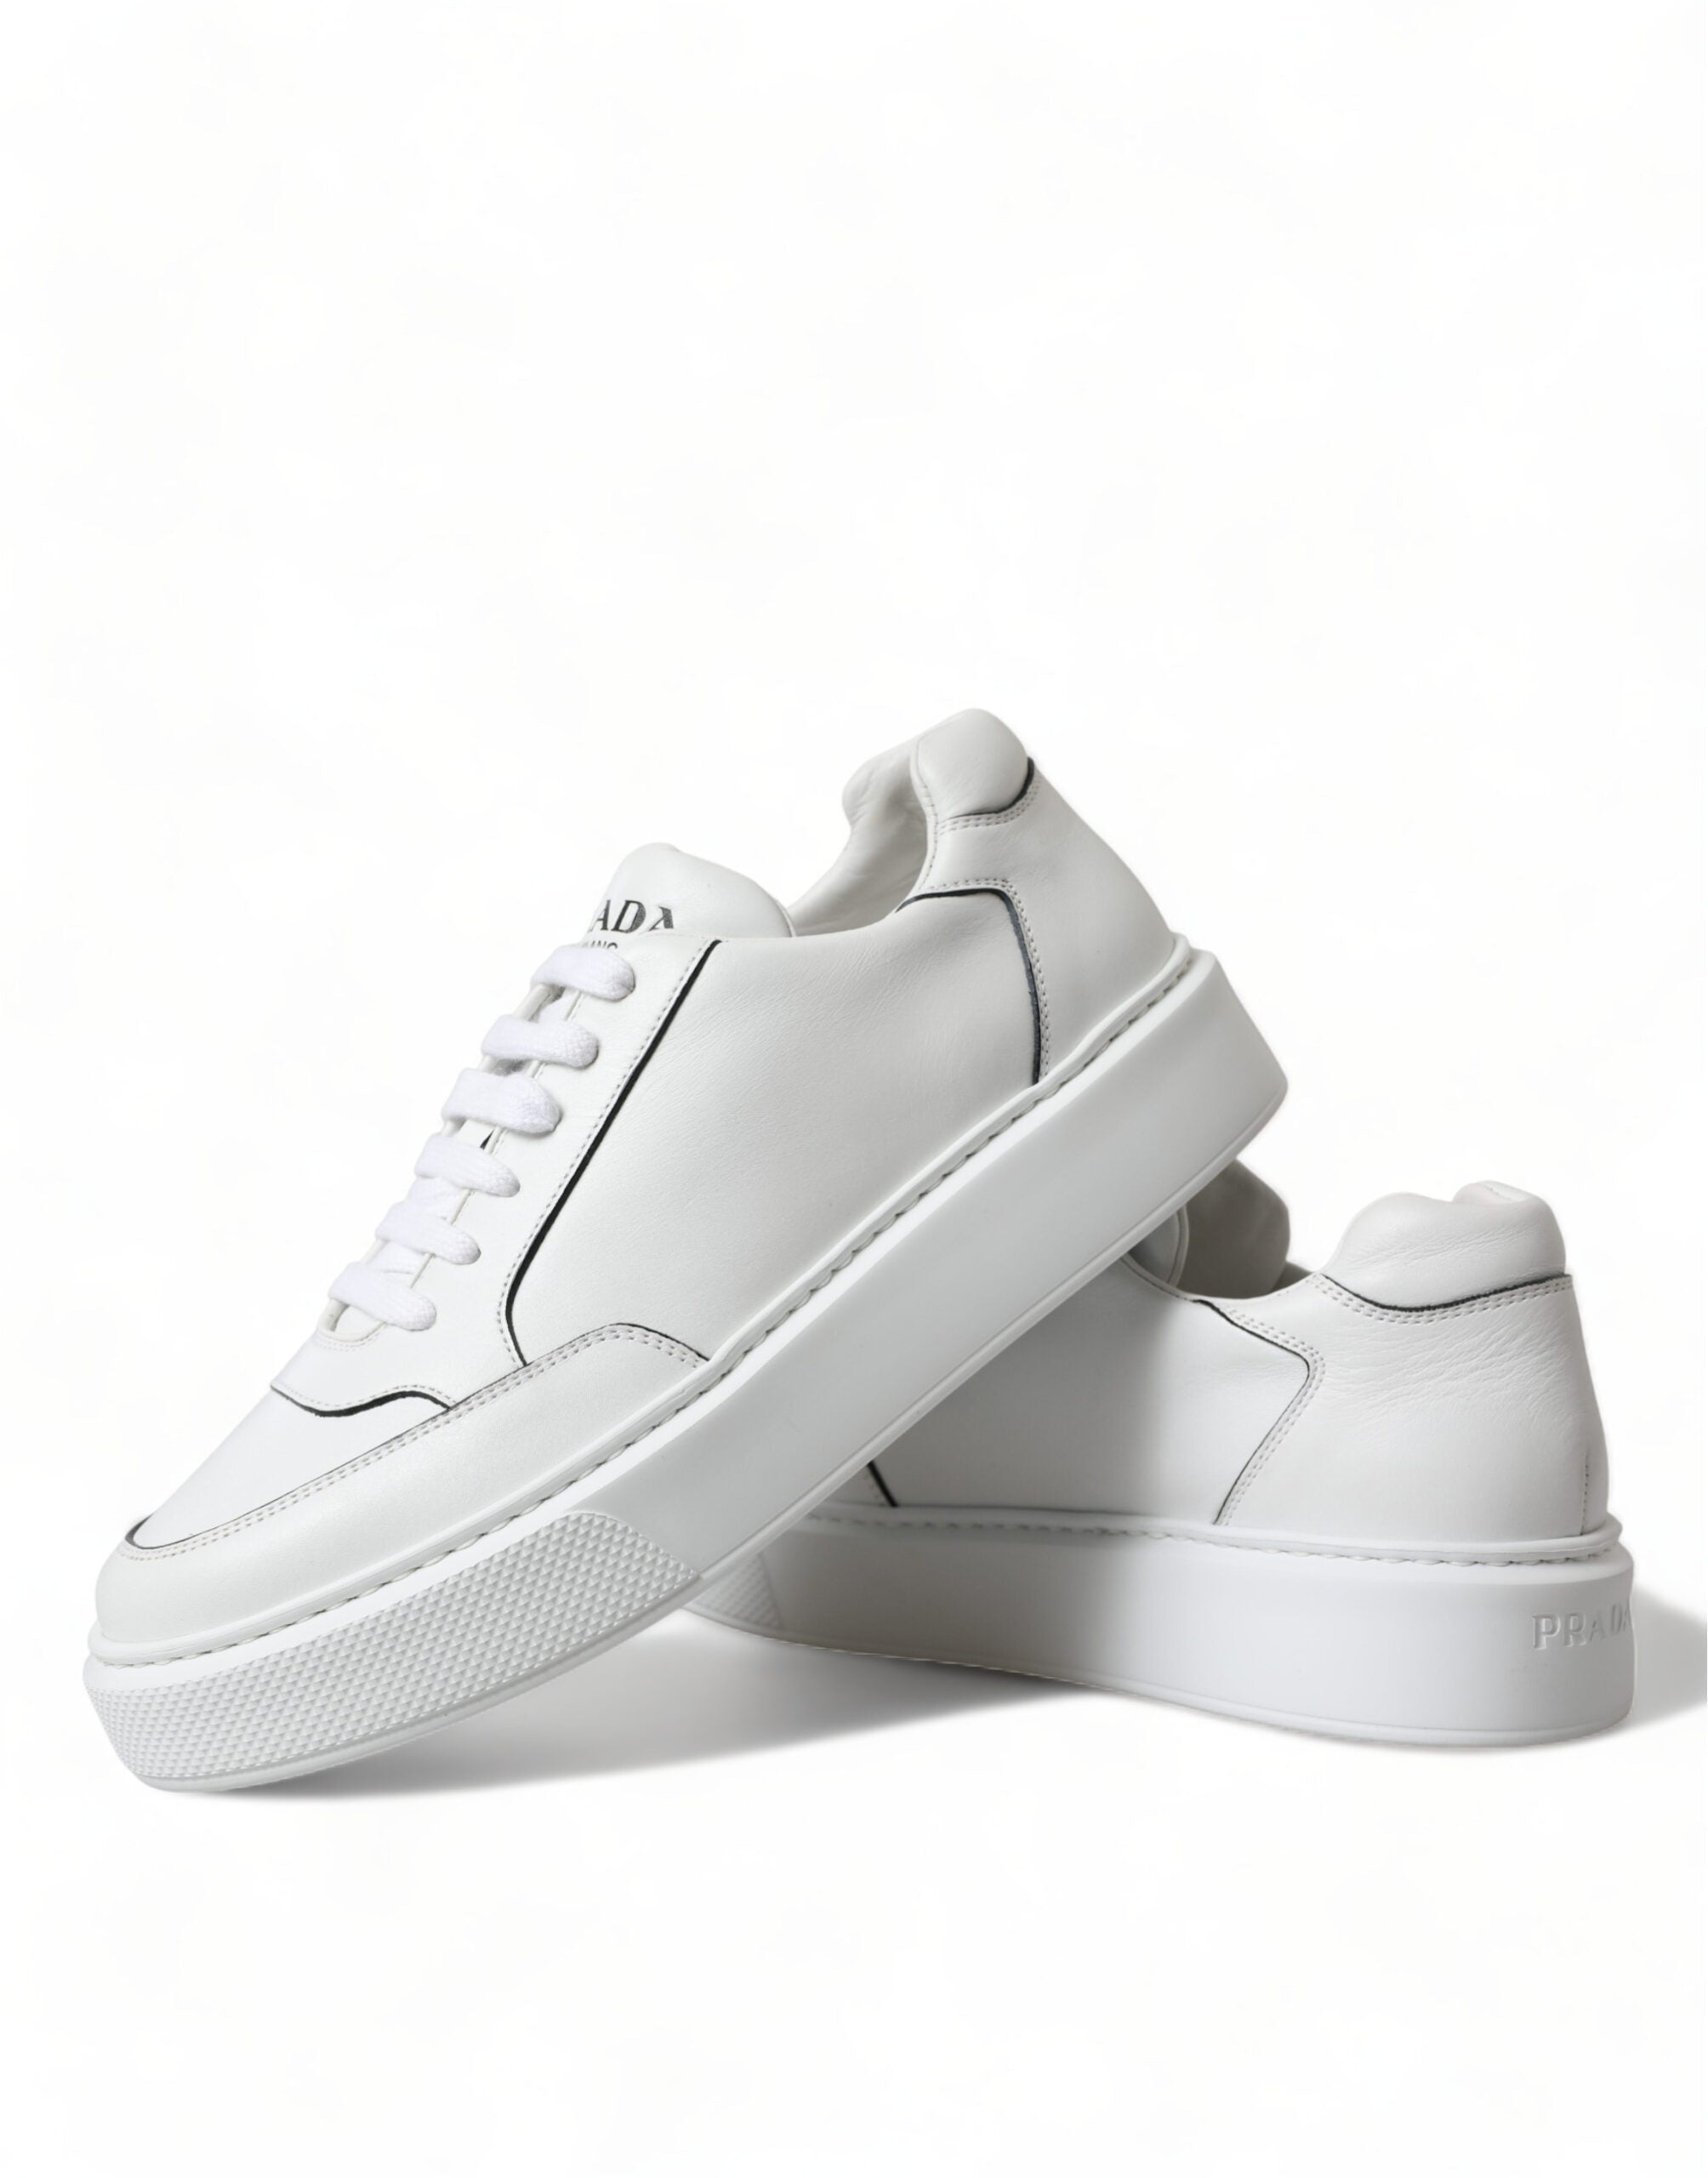 Prada Sleek White Leather Low Top Sneakers